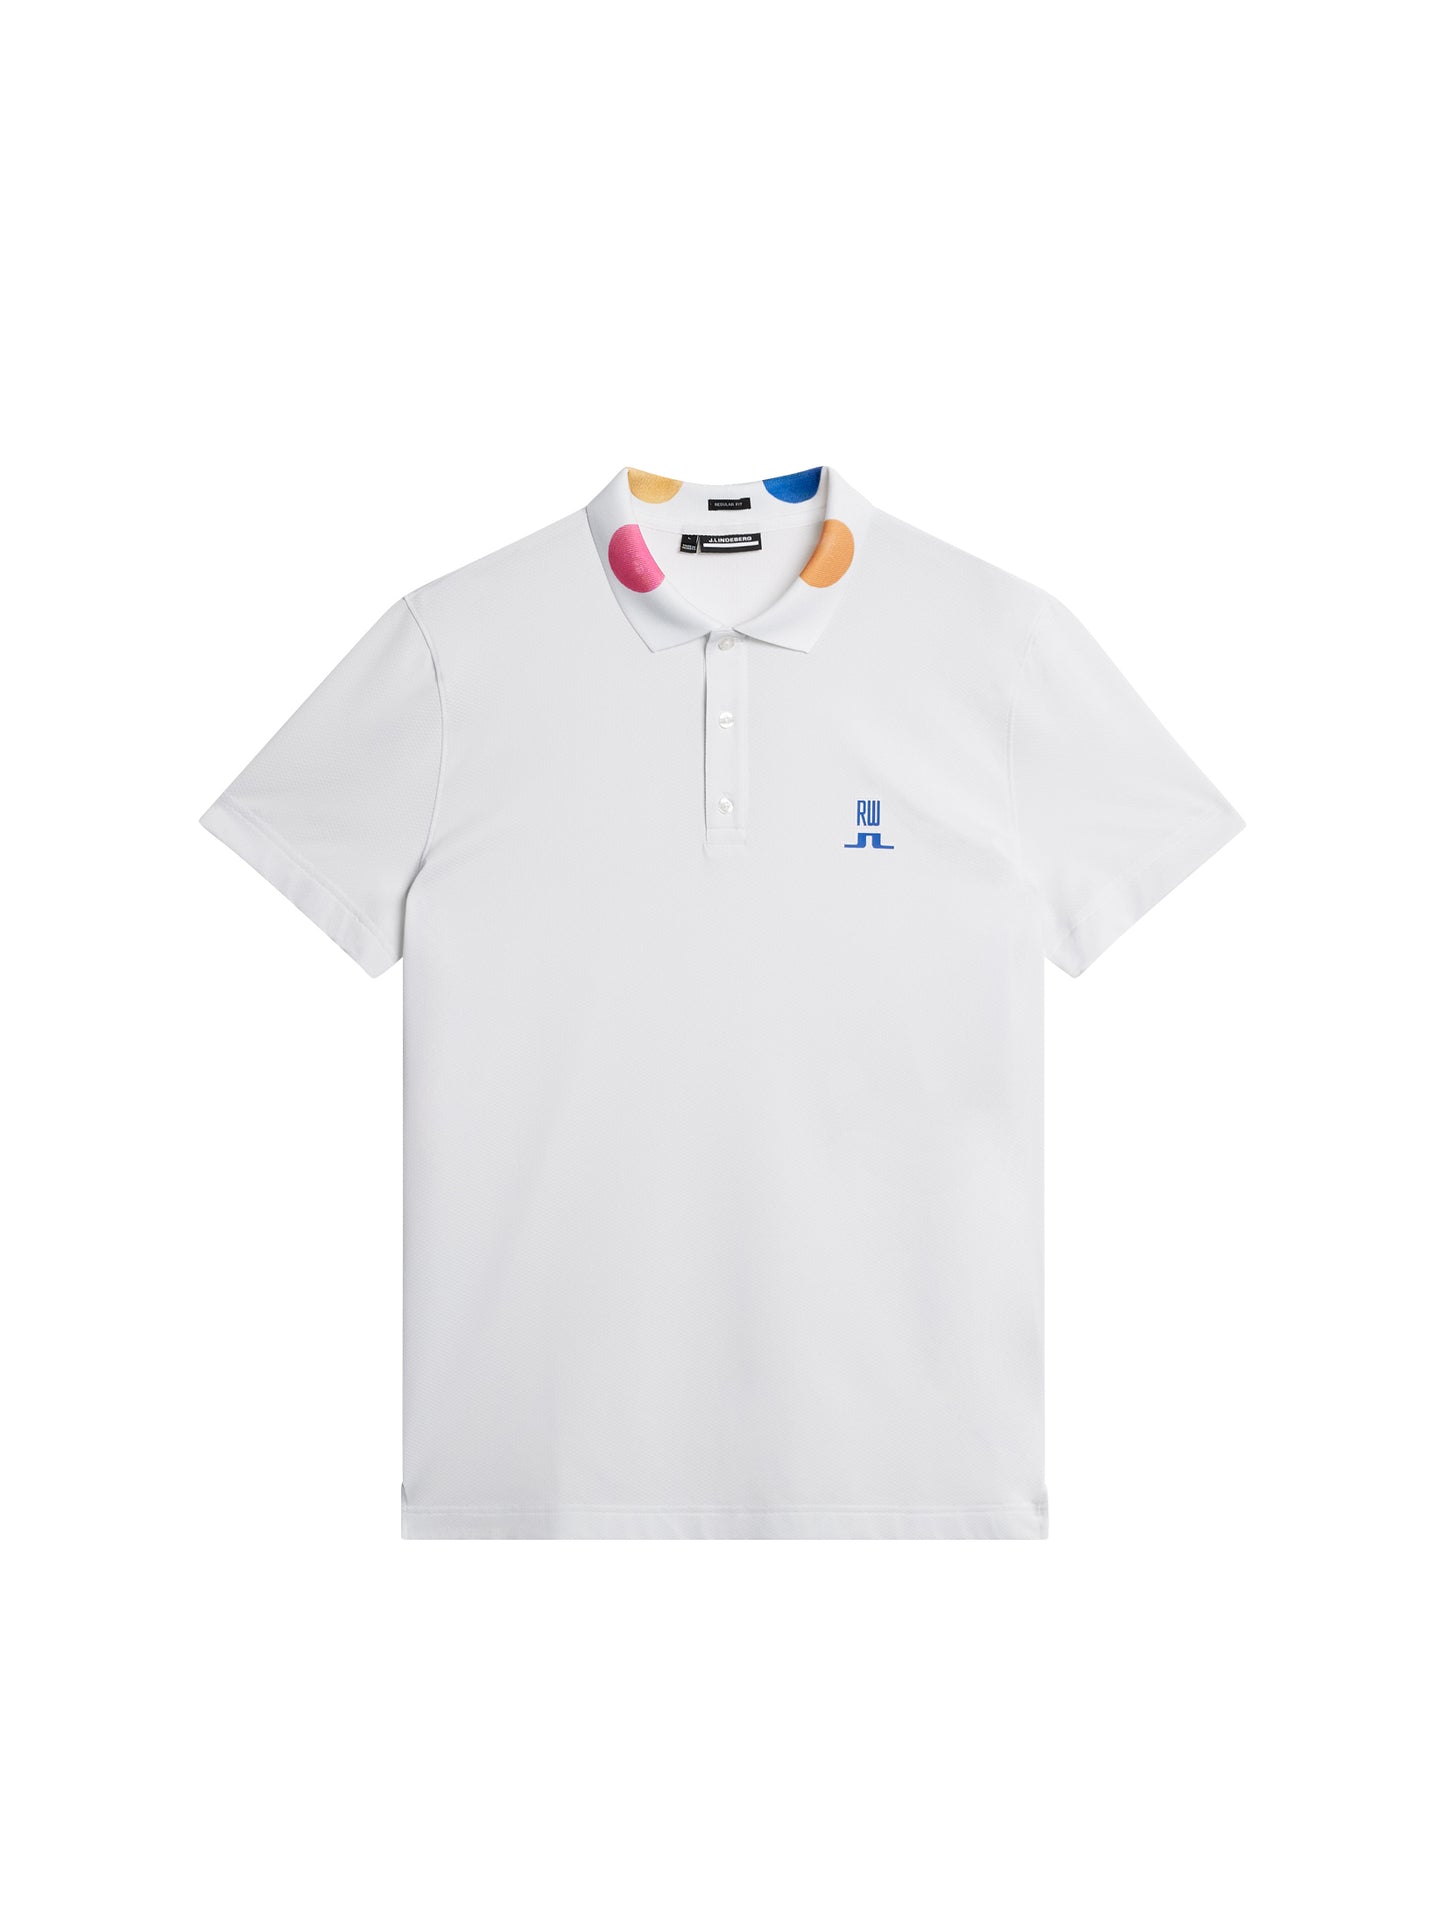 RW Tech Mesh – White Shirt / Polo